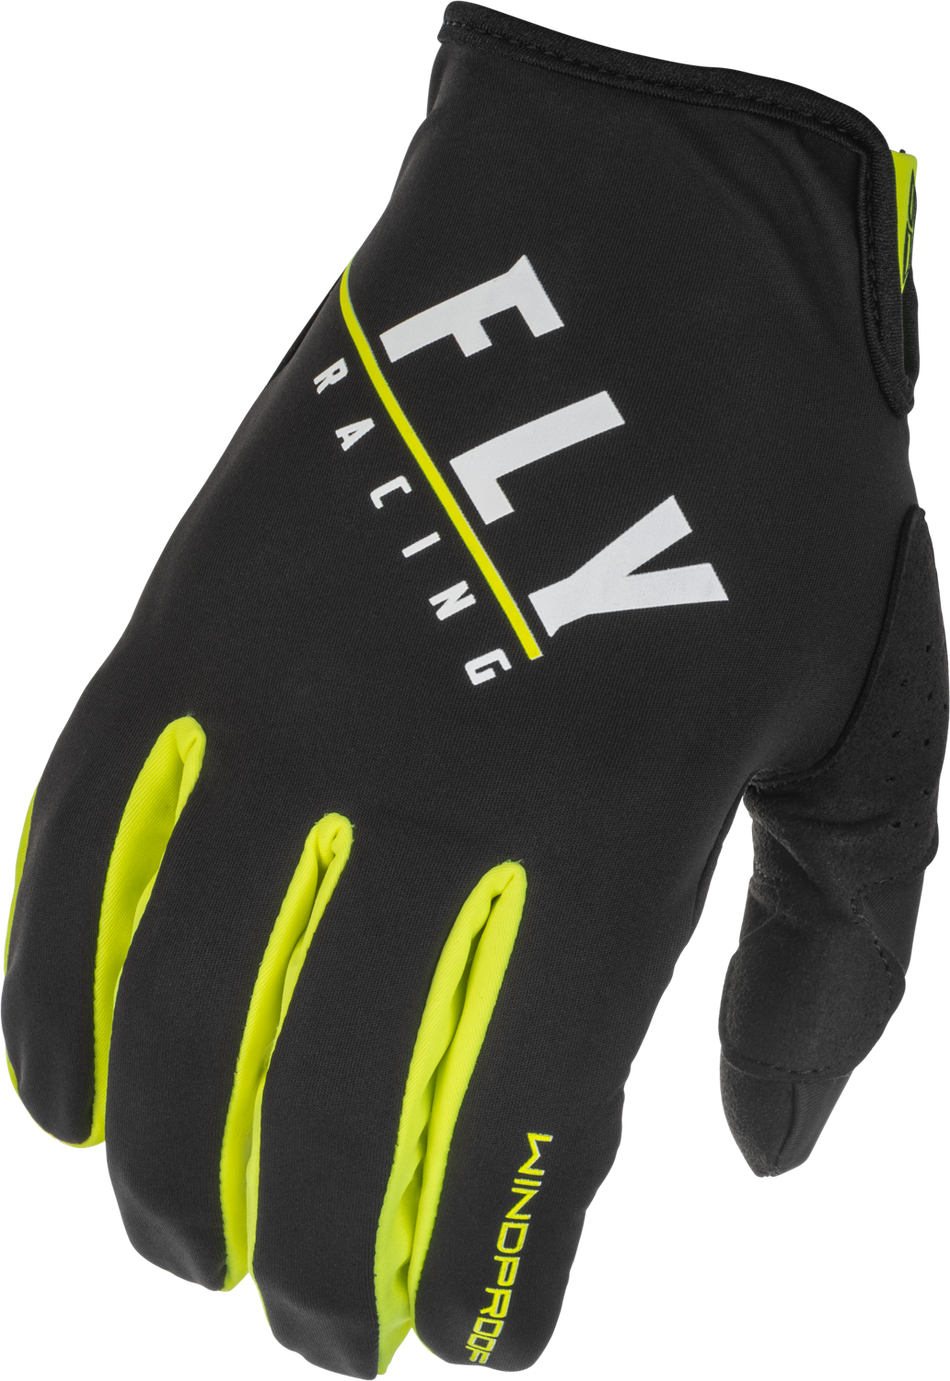 FLY RACING Windproof Gloves Black/Hi-Vis Sz 10 371-14210